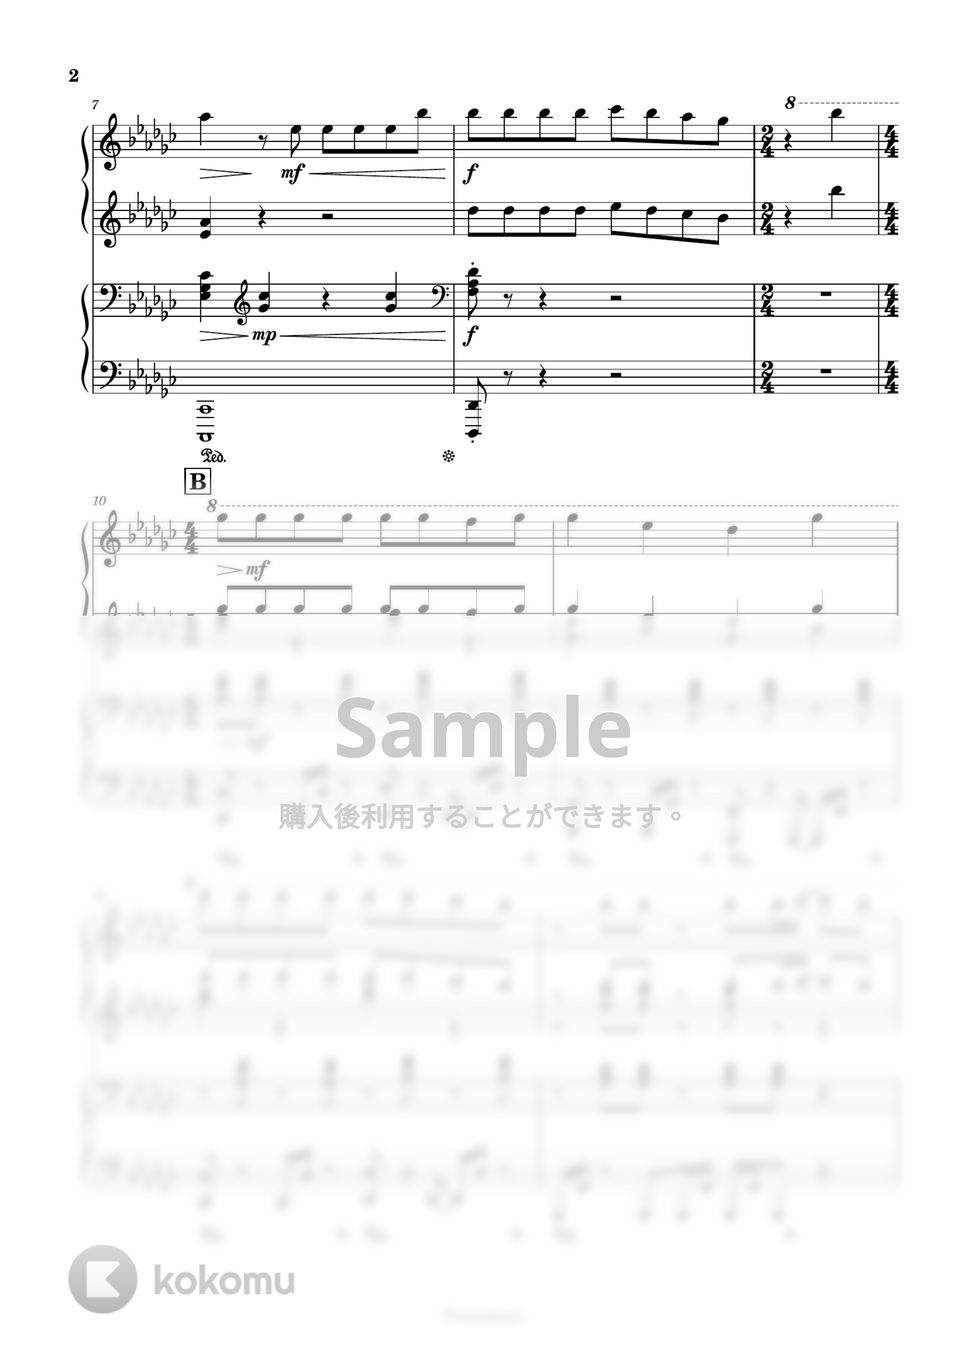 WANIMA - ともに (ピアノ連弾) by Trohishima